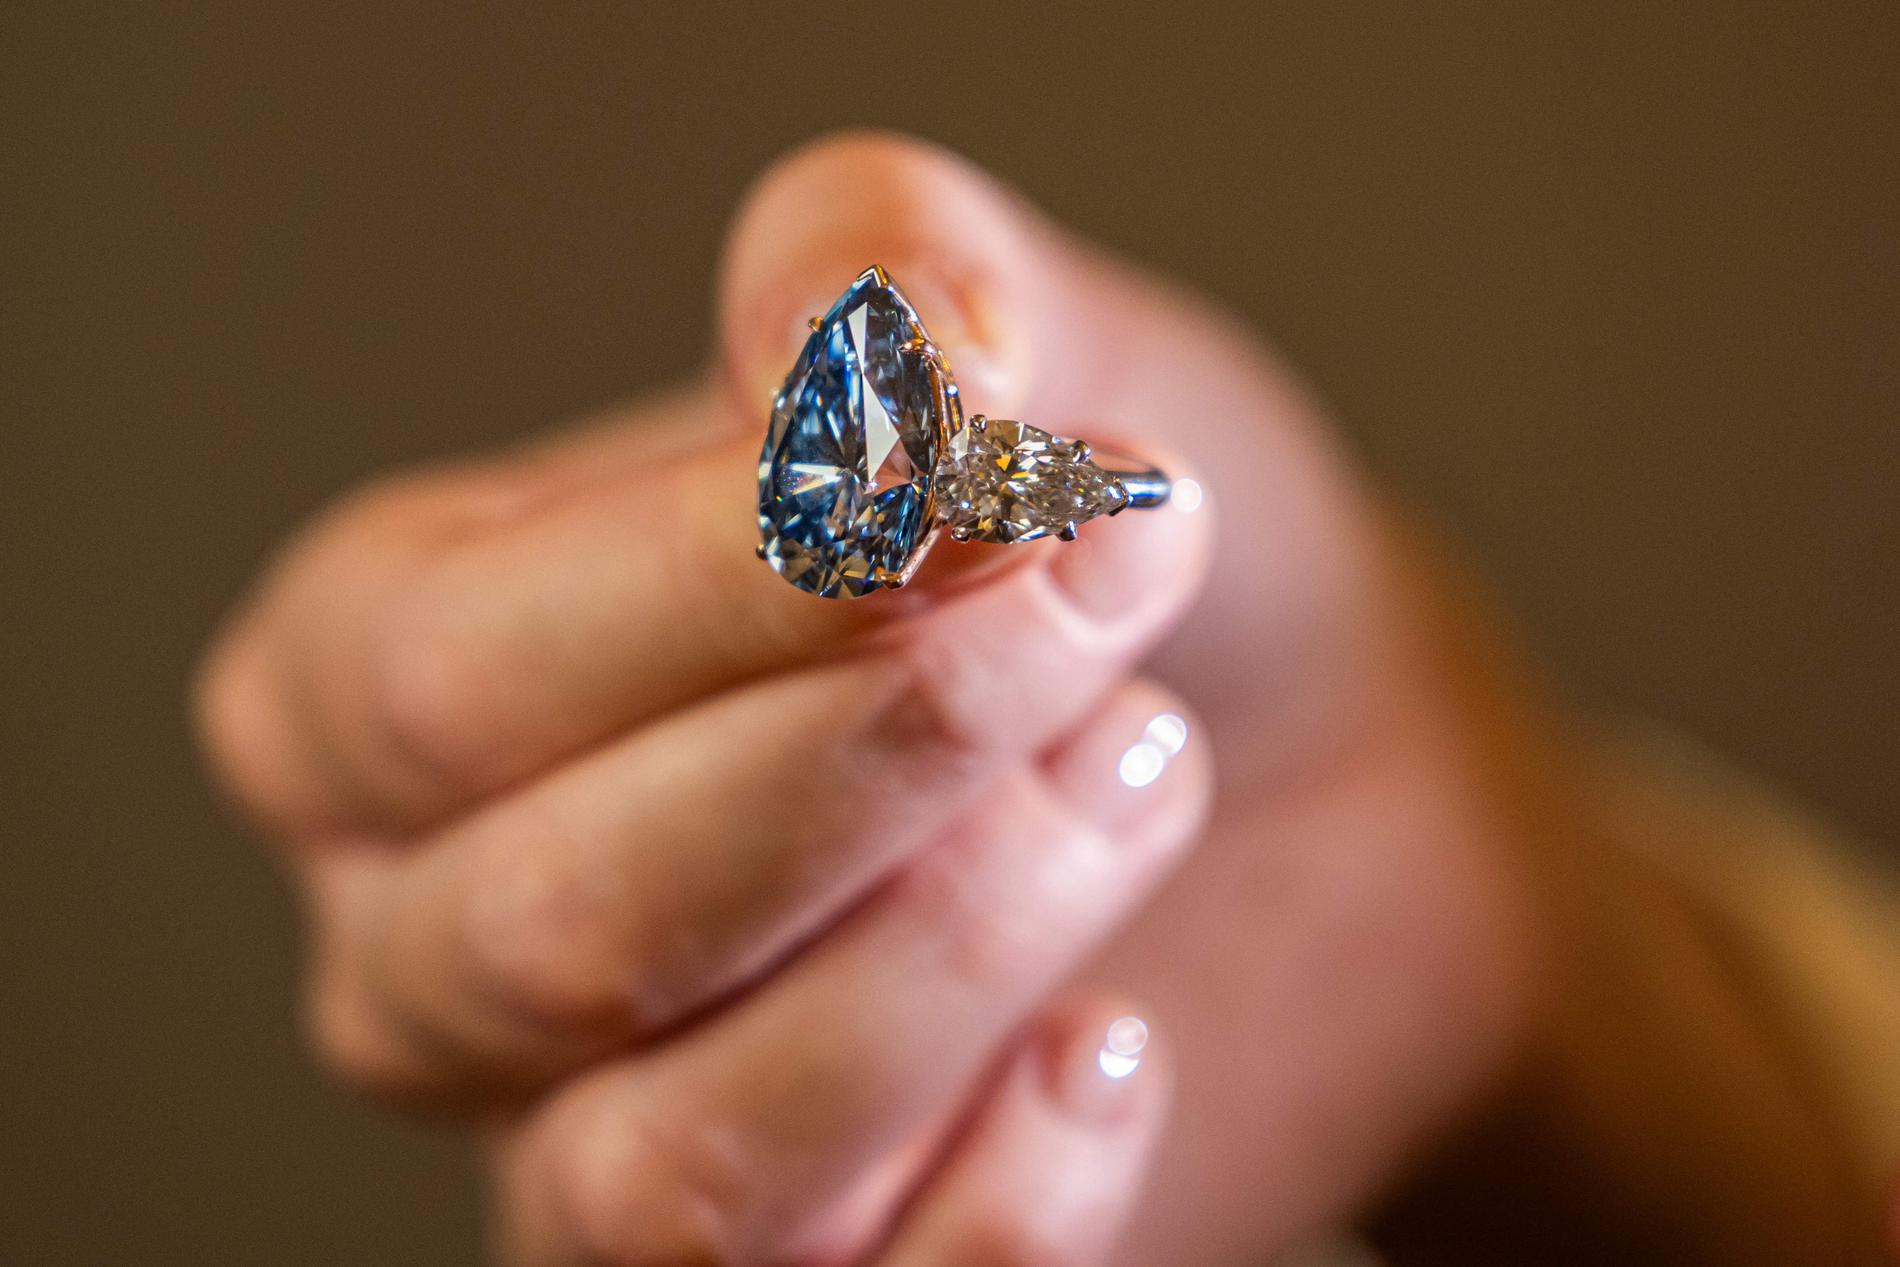 Vivid Blue Diamond ‘Bleu Royal’ Sets Auction Record at Christie’s